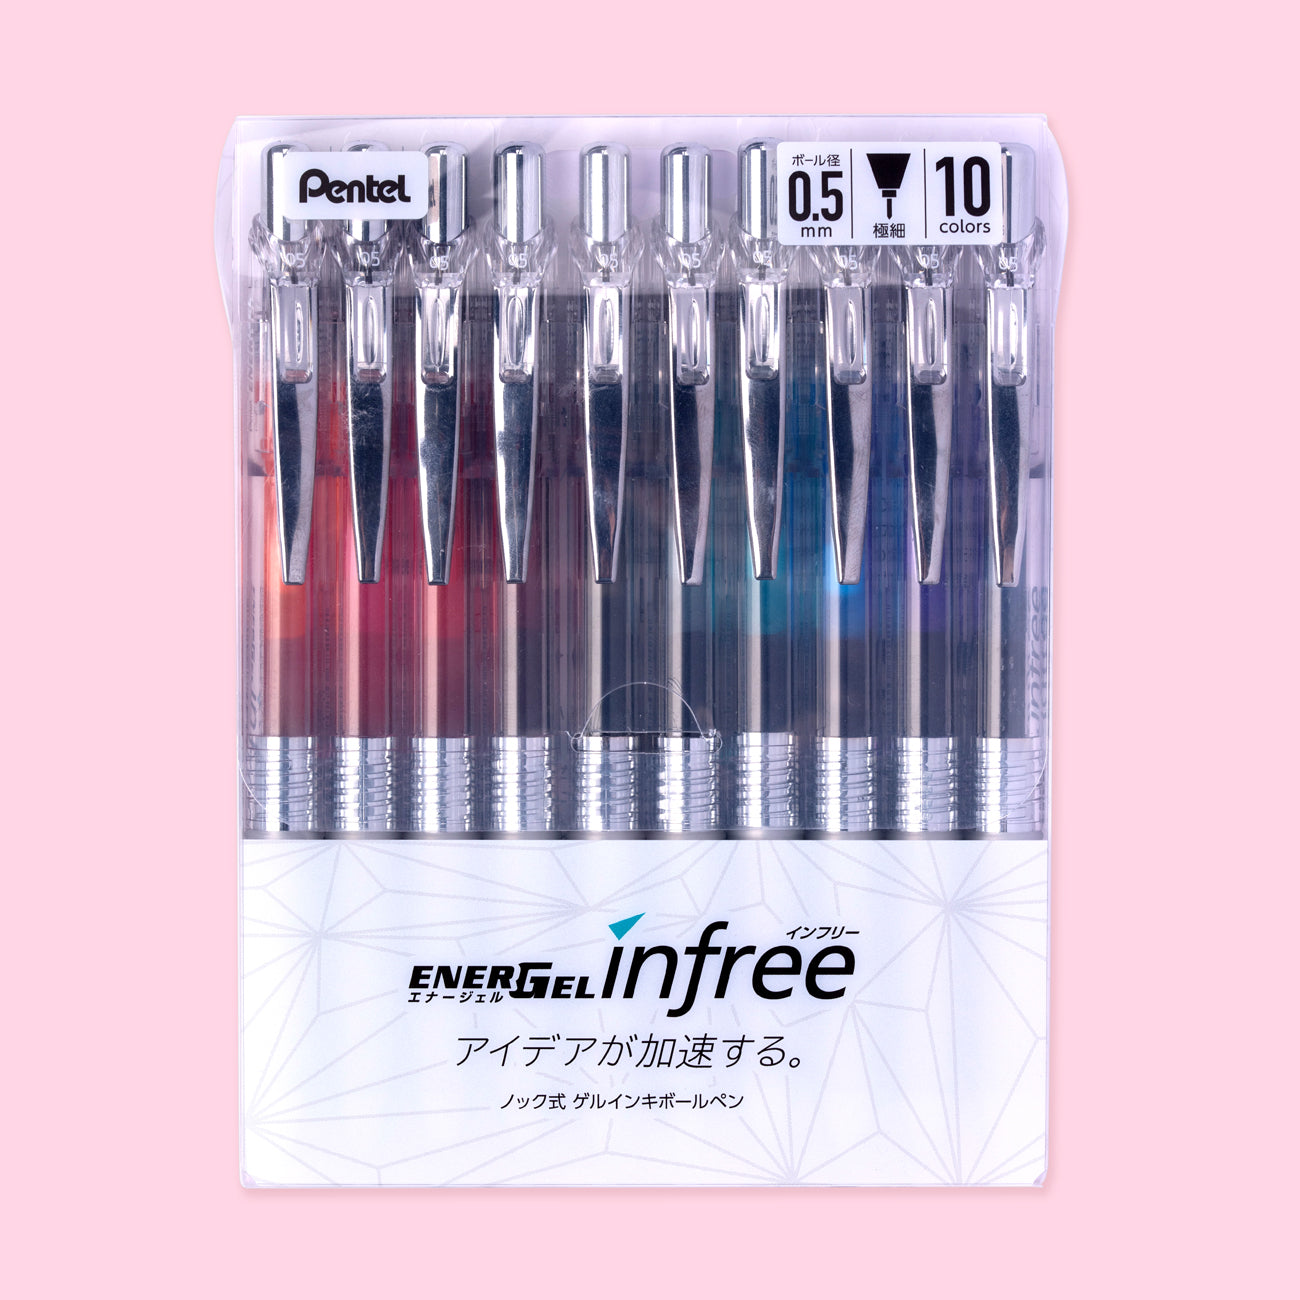 Pentel EnerGel Infree Gel Pen - 0.5 mm - 10 Color Set